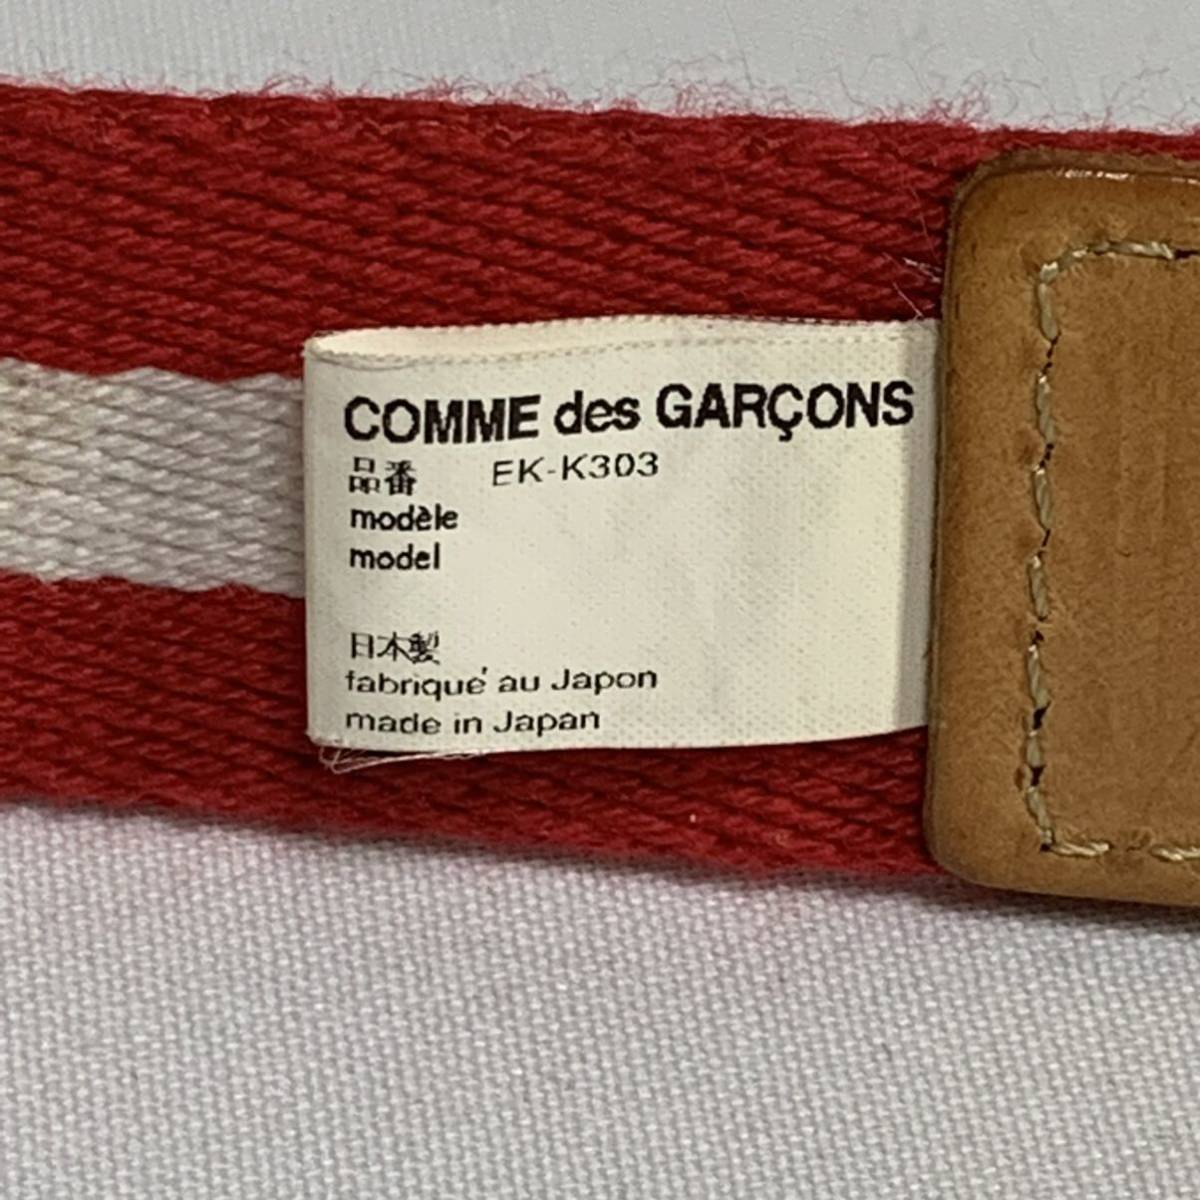 COMME des GARCONS GANRYU ガチャベルト レッド フィッシュ レザー コムデギャルソン ガンリュウ ライン red leather